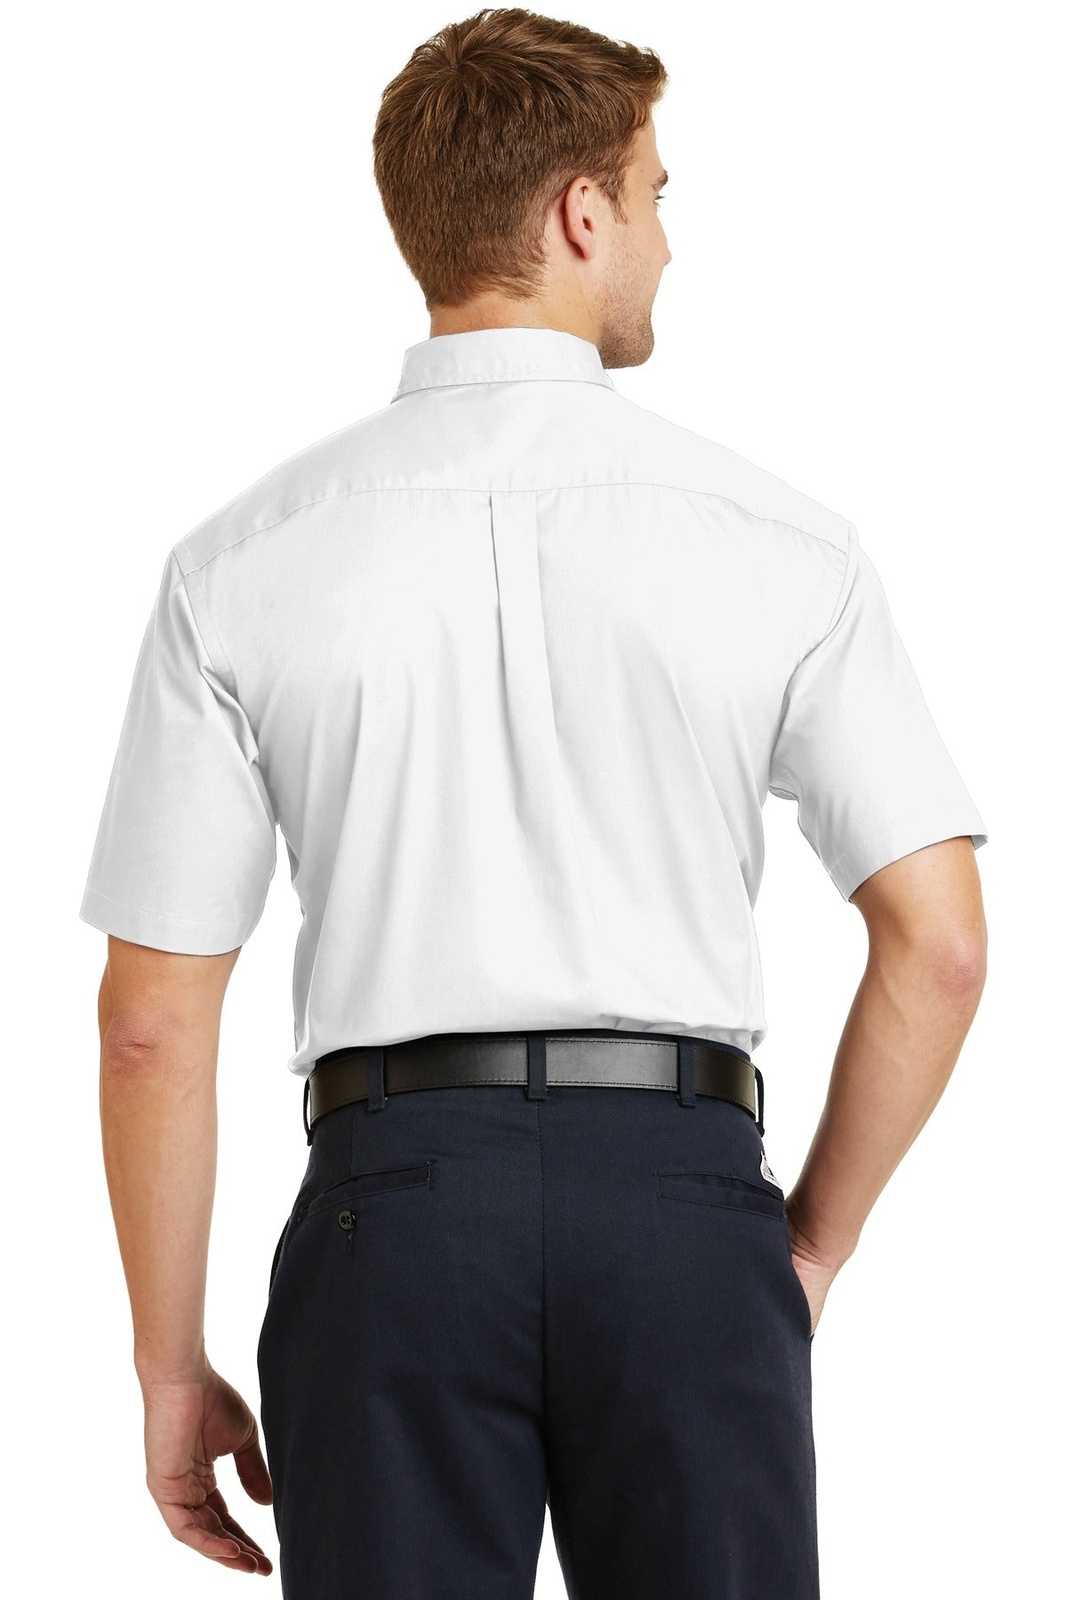 CornerStone SP18 Short Sleeve Superpro Twill Shirt - White - HIT a Double - 2